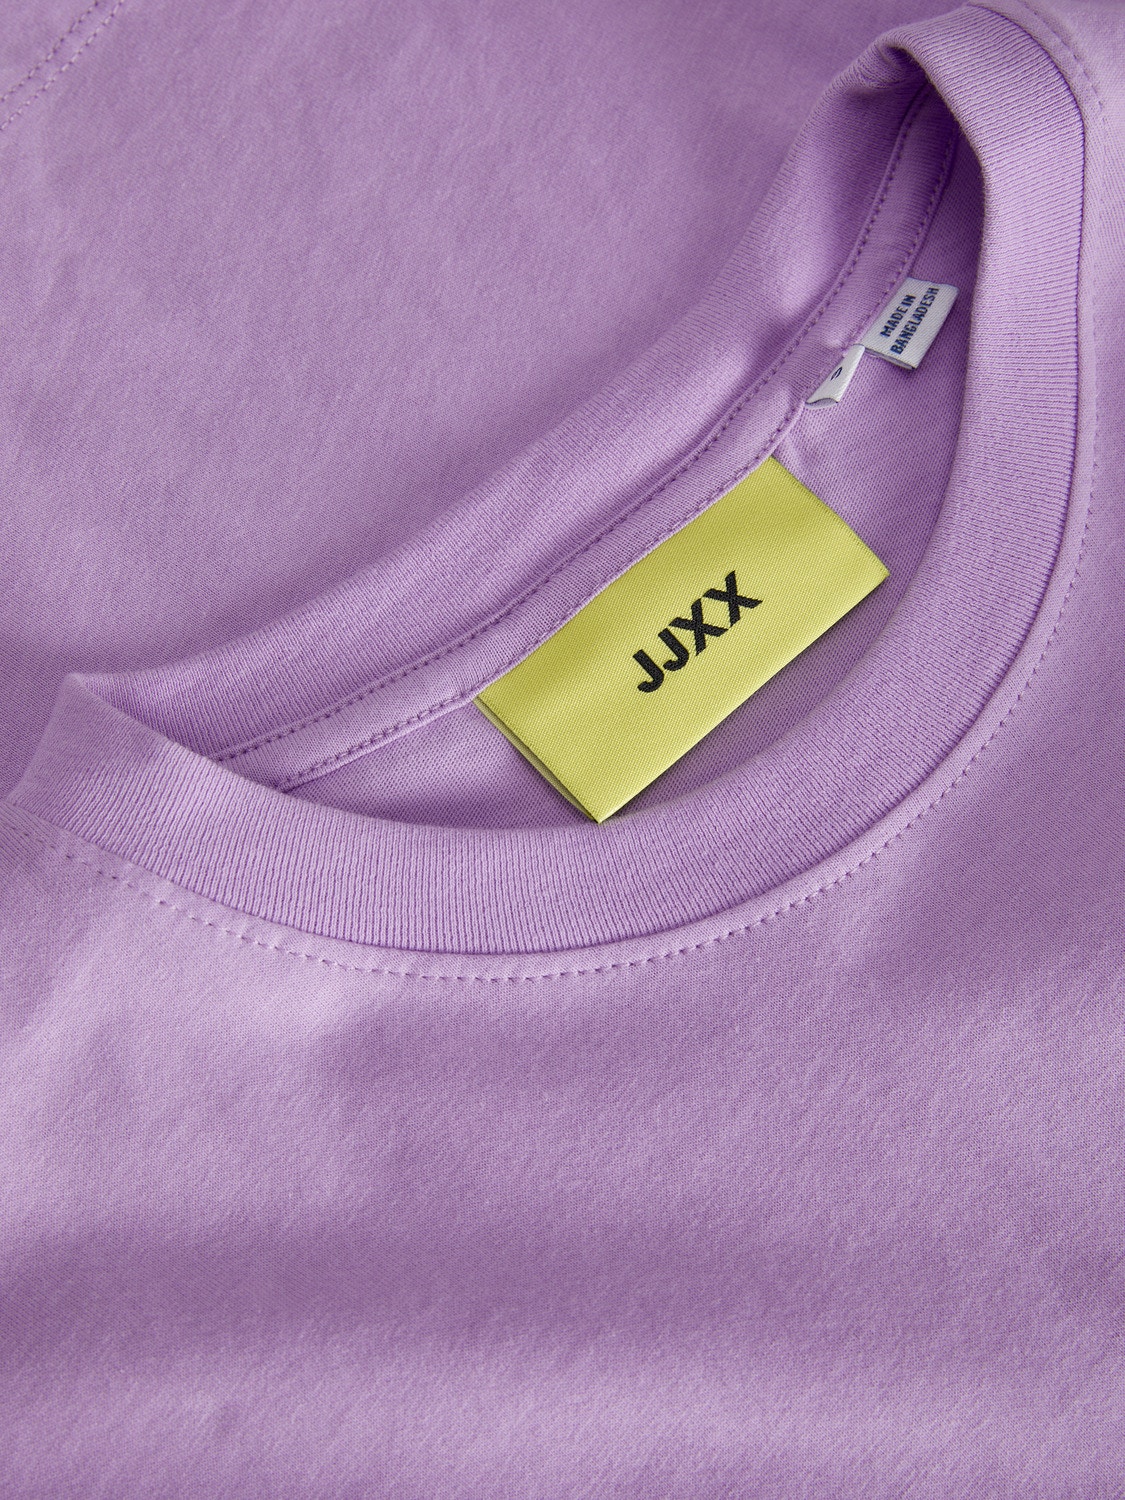 JJXX Καλοκαιρινό μπλουζάκι -Lilac Breeze - 12200182